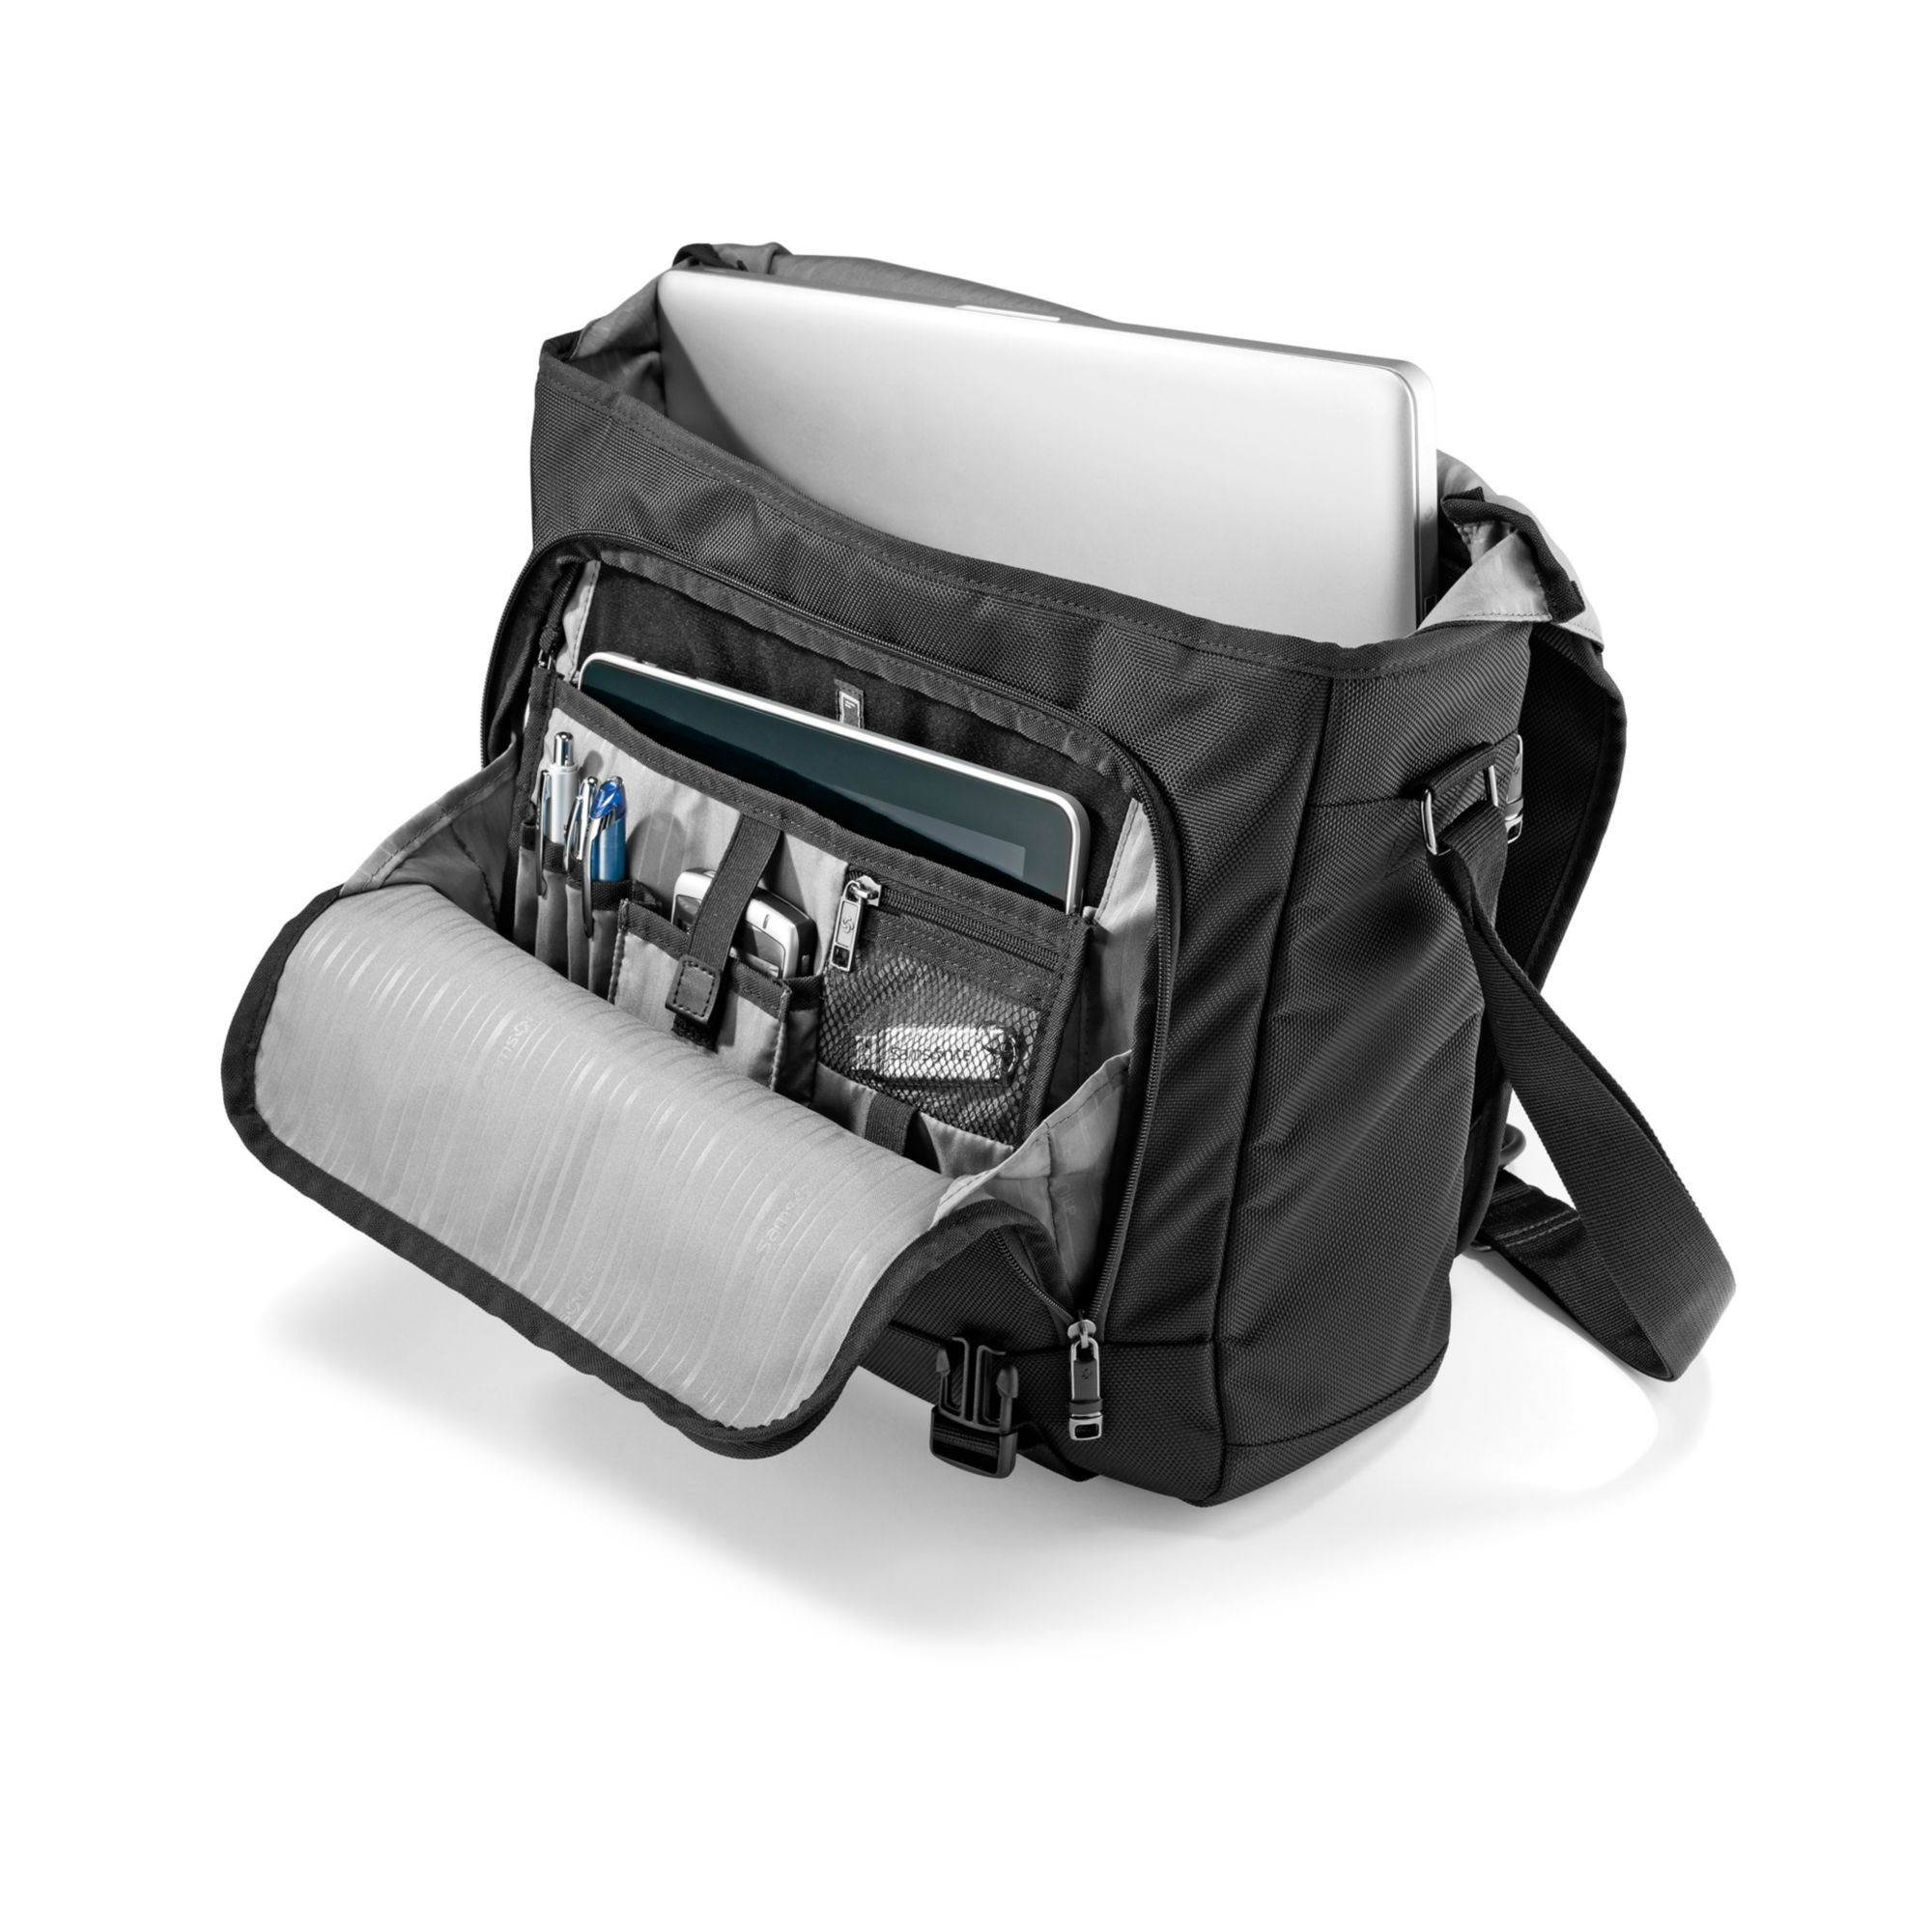  Samsonite  Professional Laptop Messenger  Bag  in Black for 